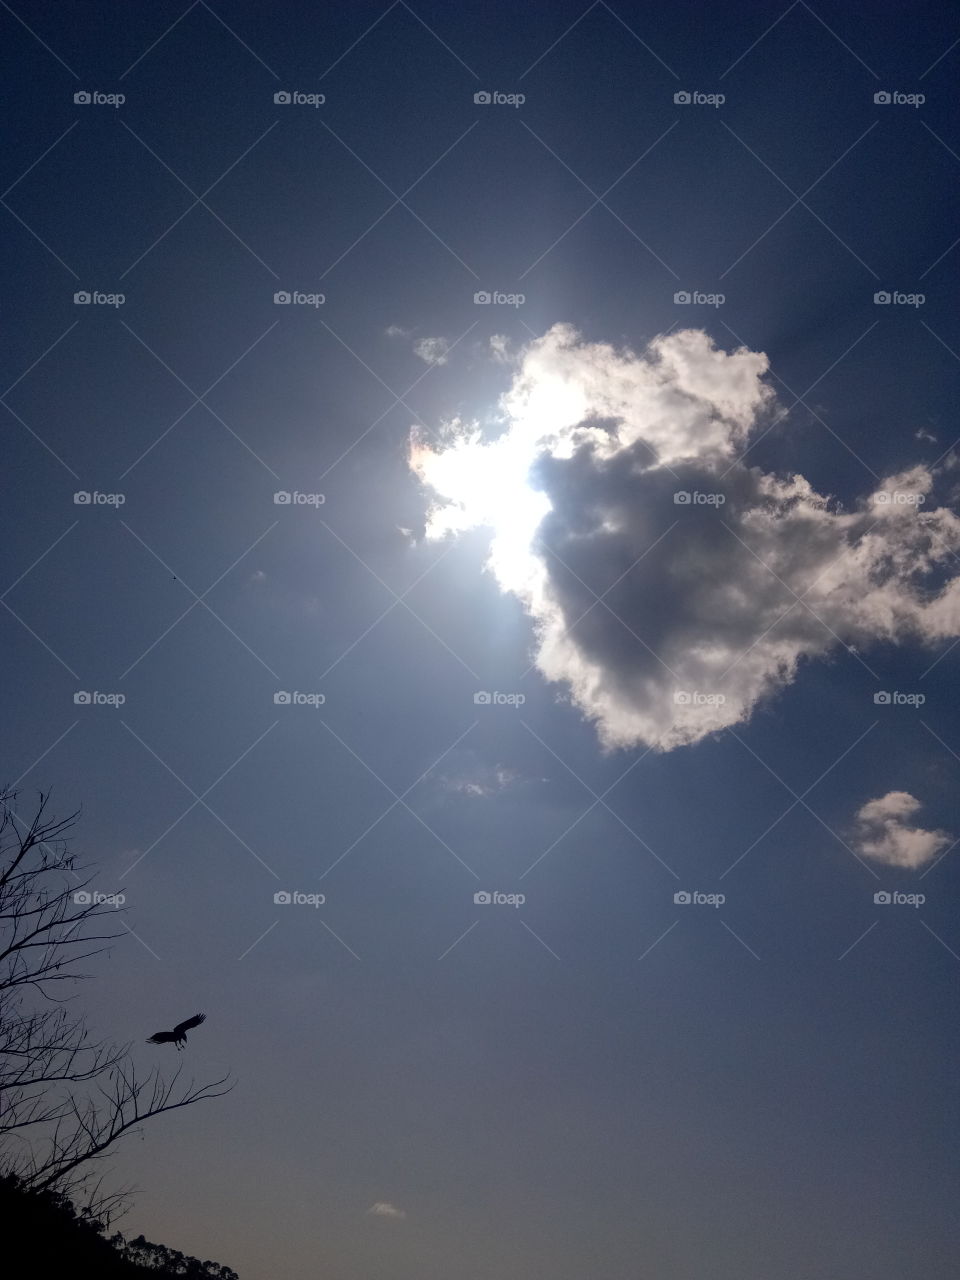 All together #Dark cloud ☁  #Sunlight ☀  #Bird. The beautiful day.